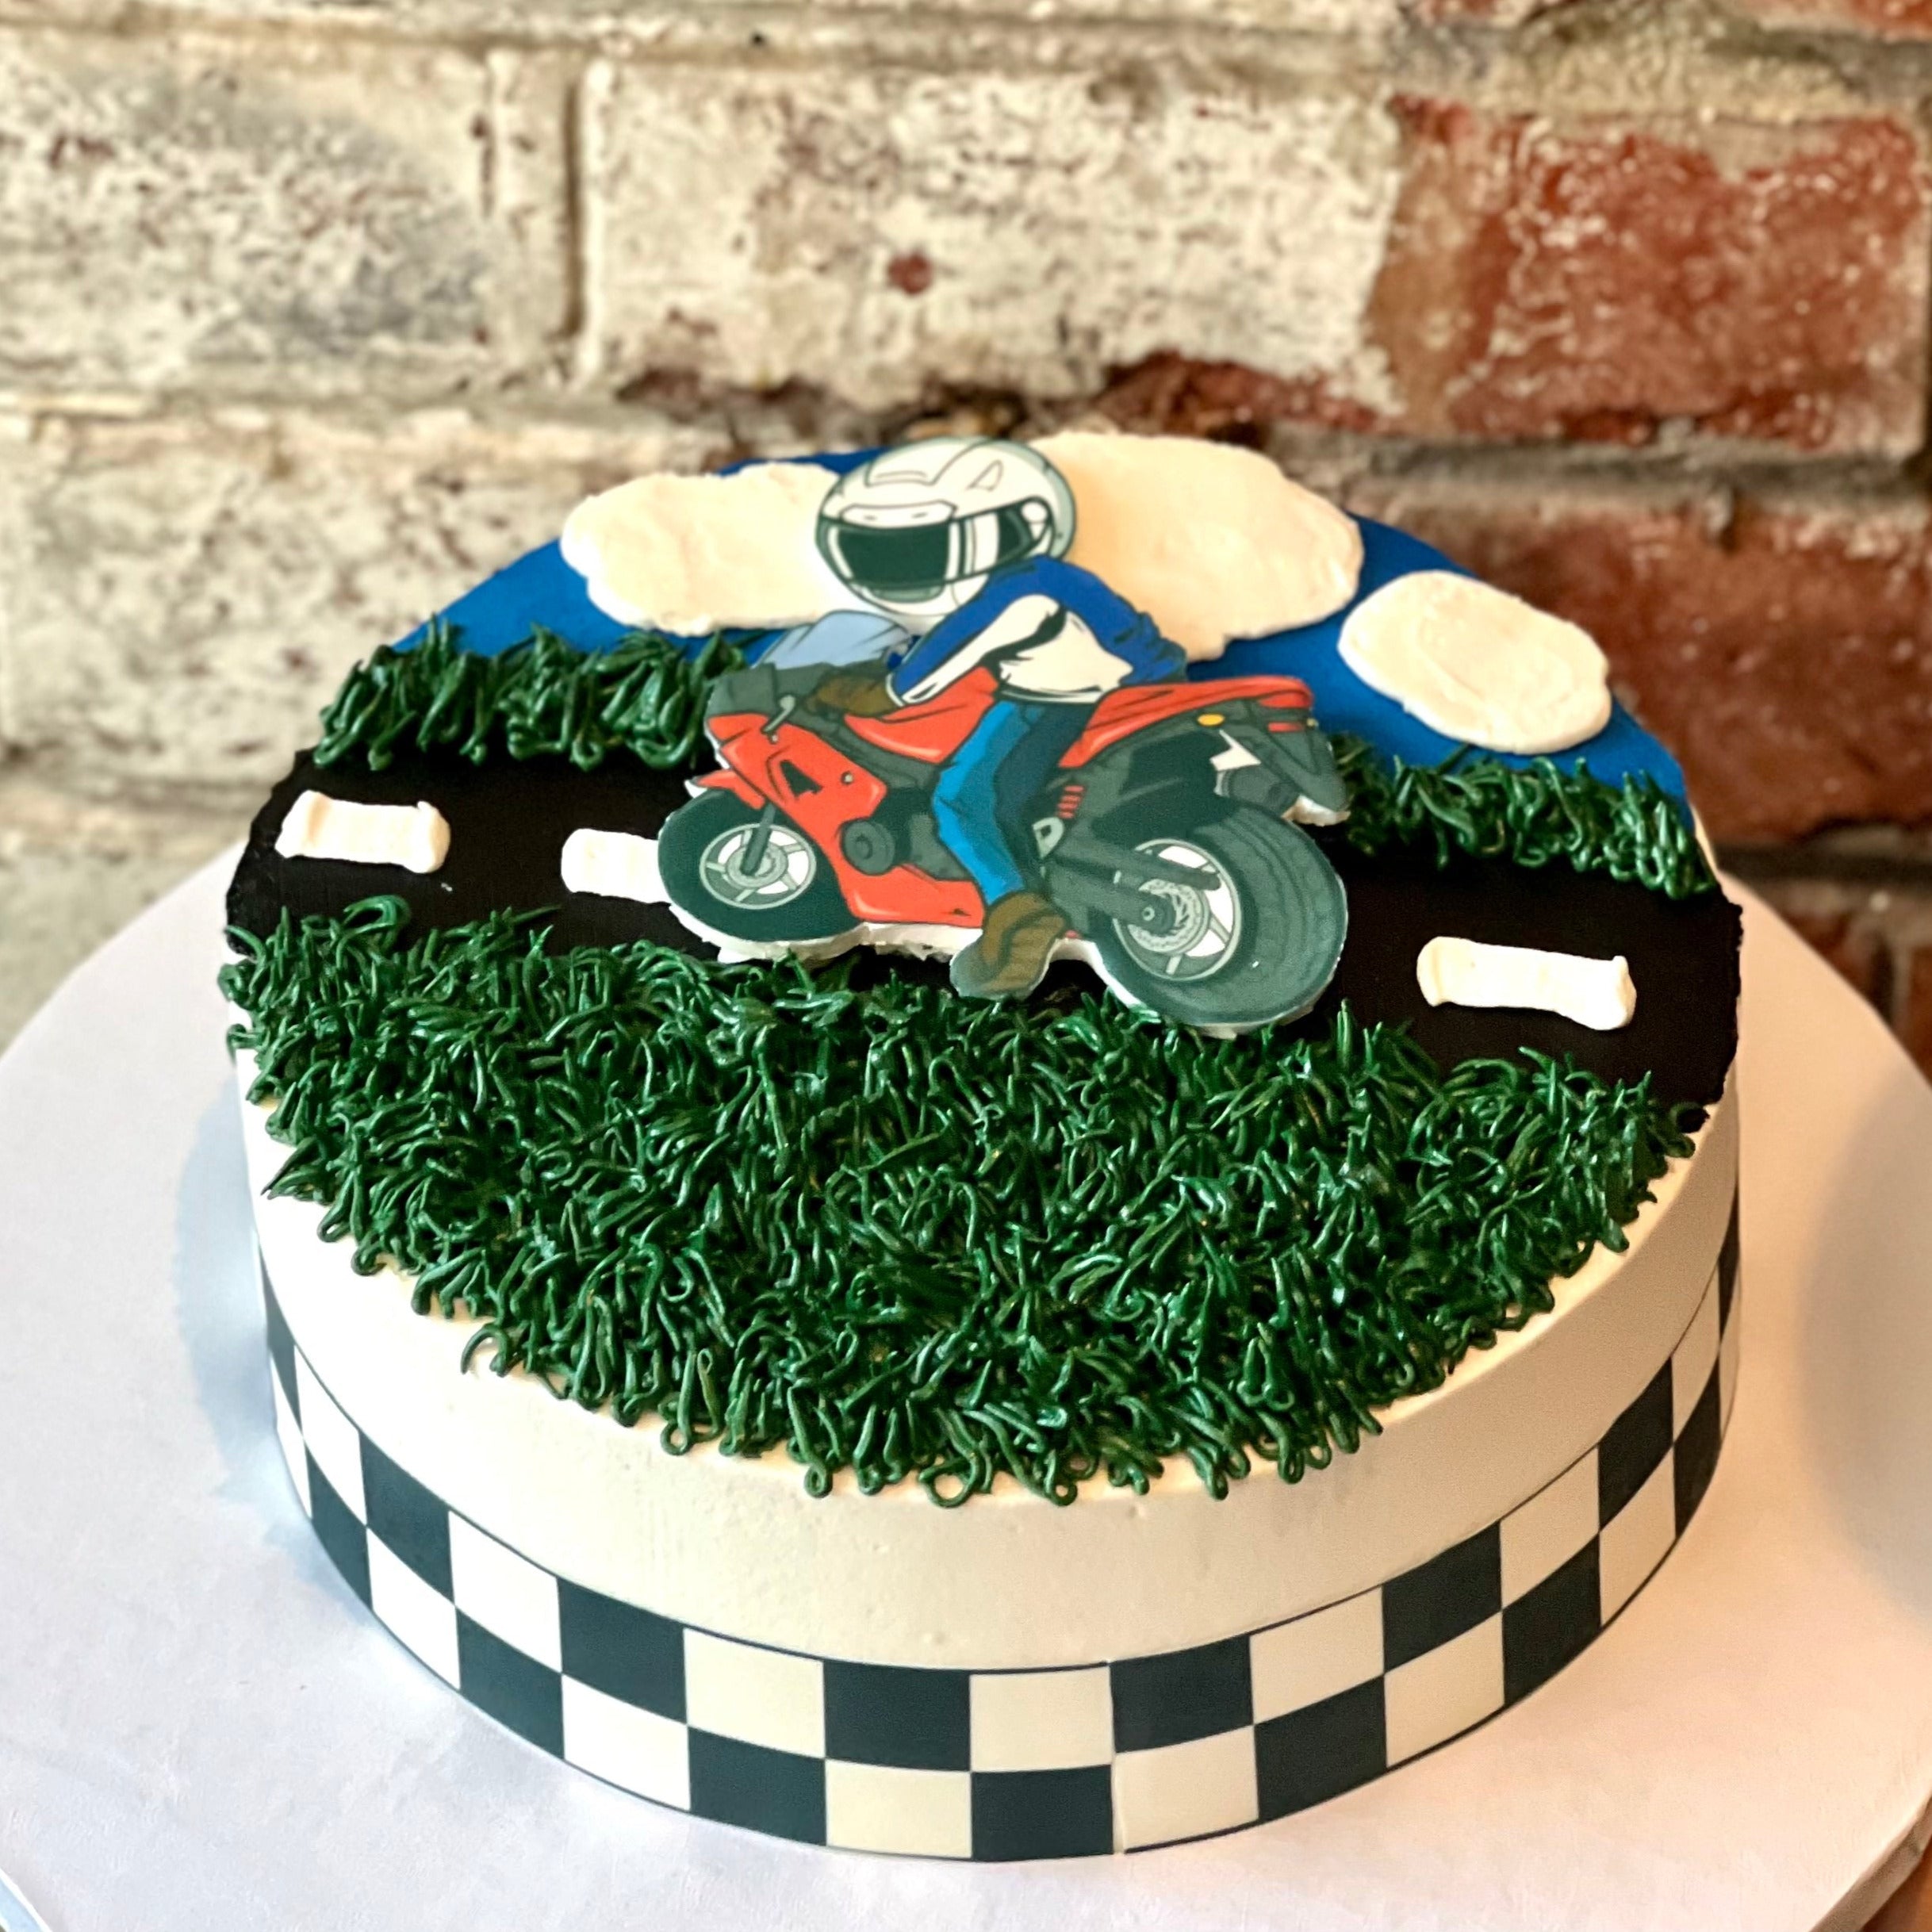 50th birthday cake for a cyclist fanatic | Cycling cake, Bicycle cake, 50th birthday  cake